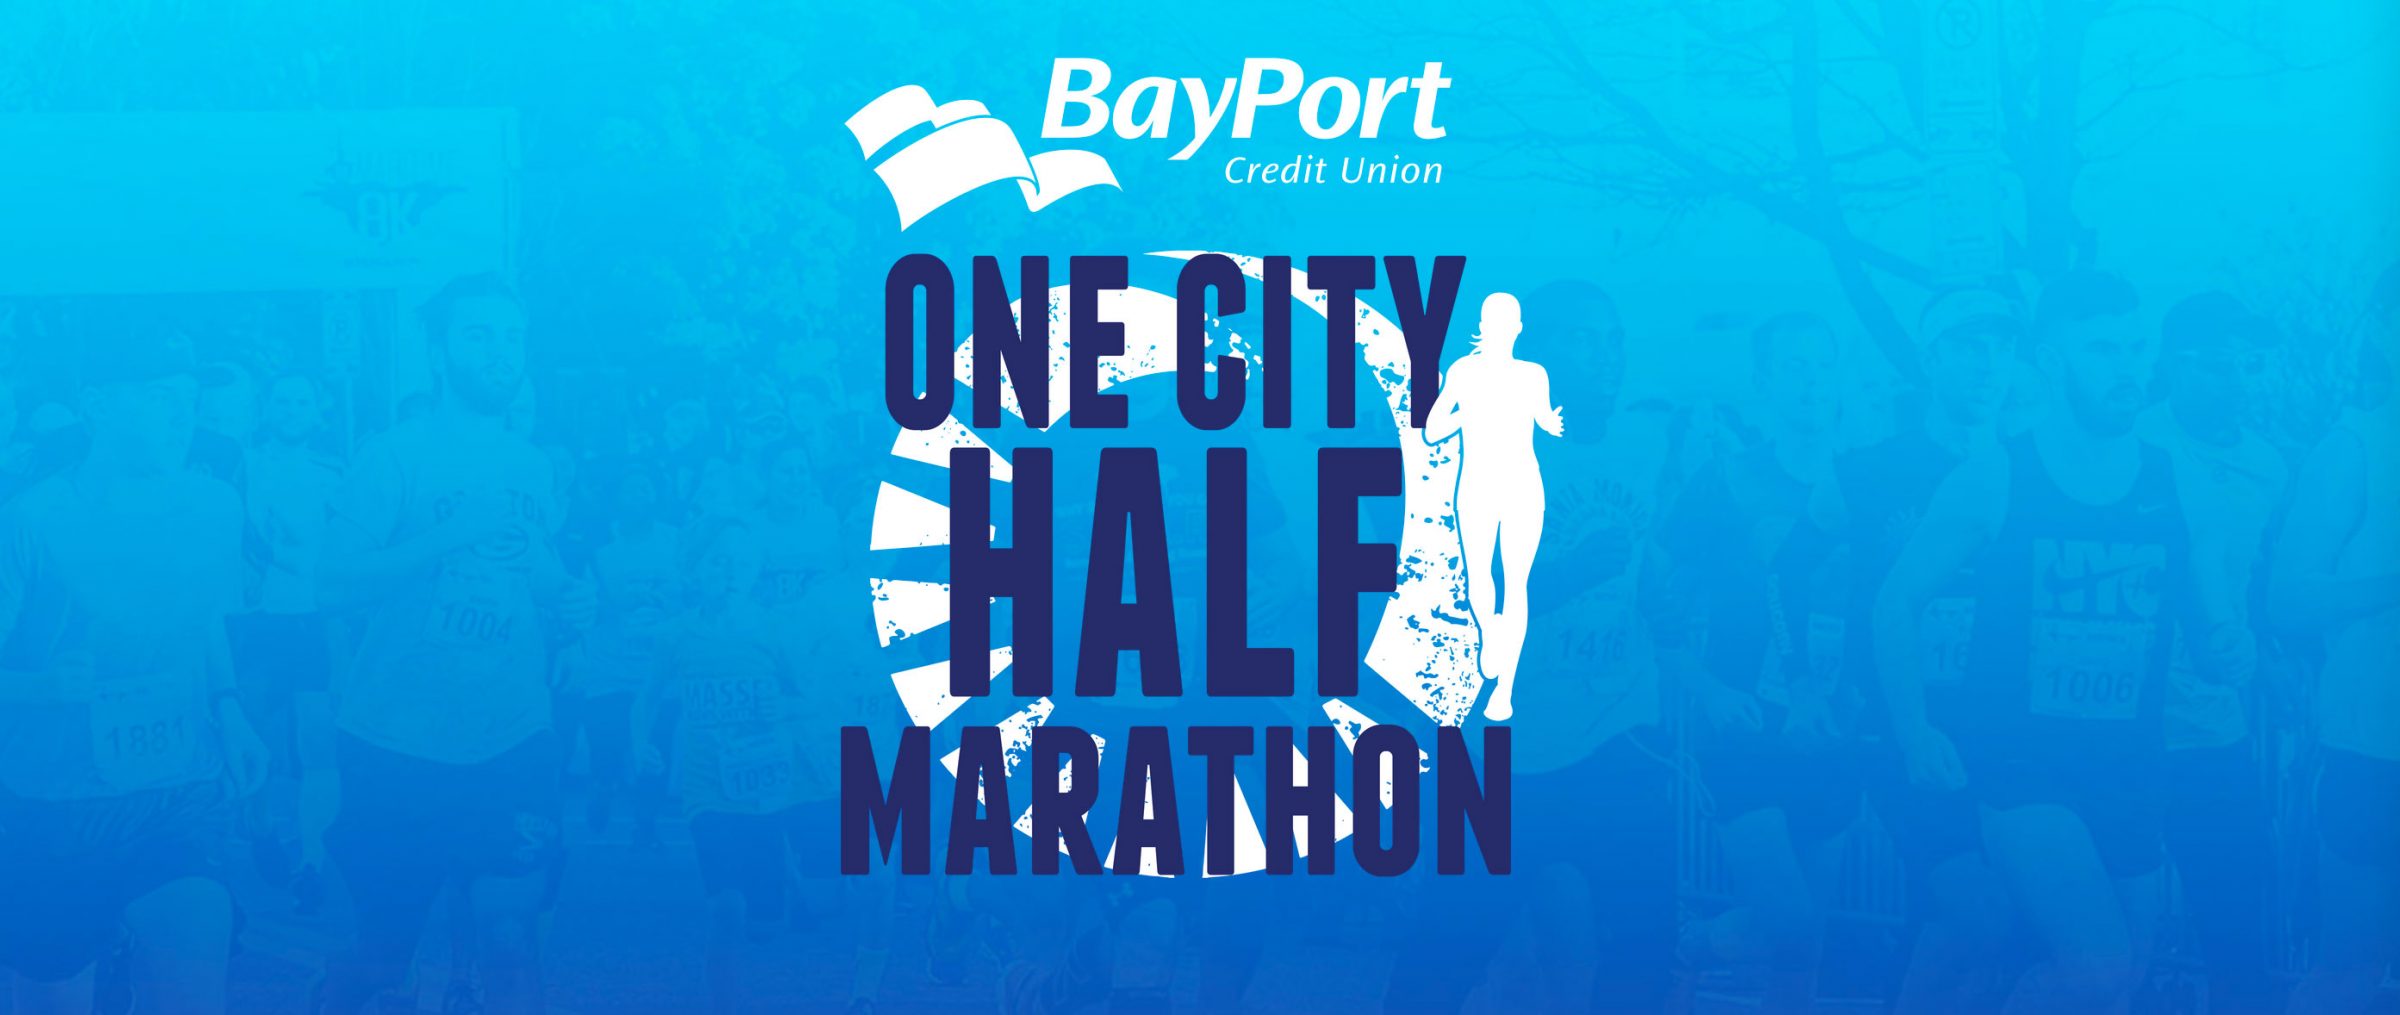 one city half marathon